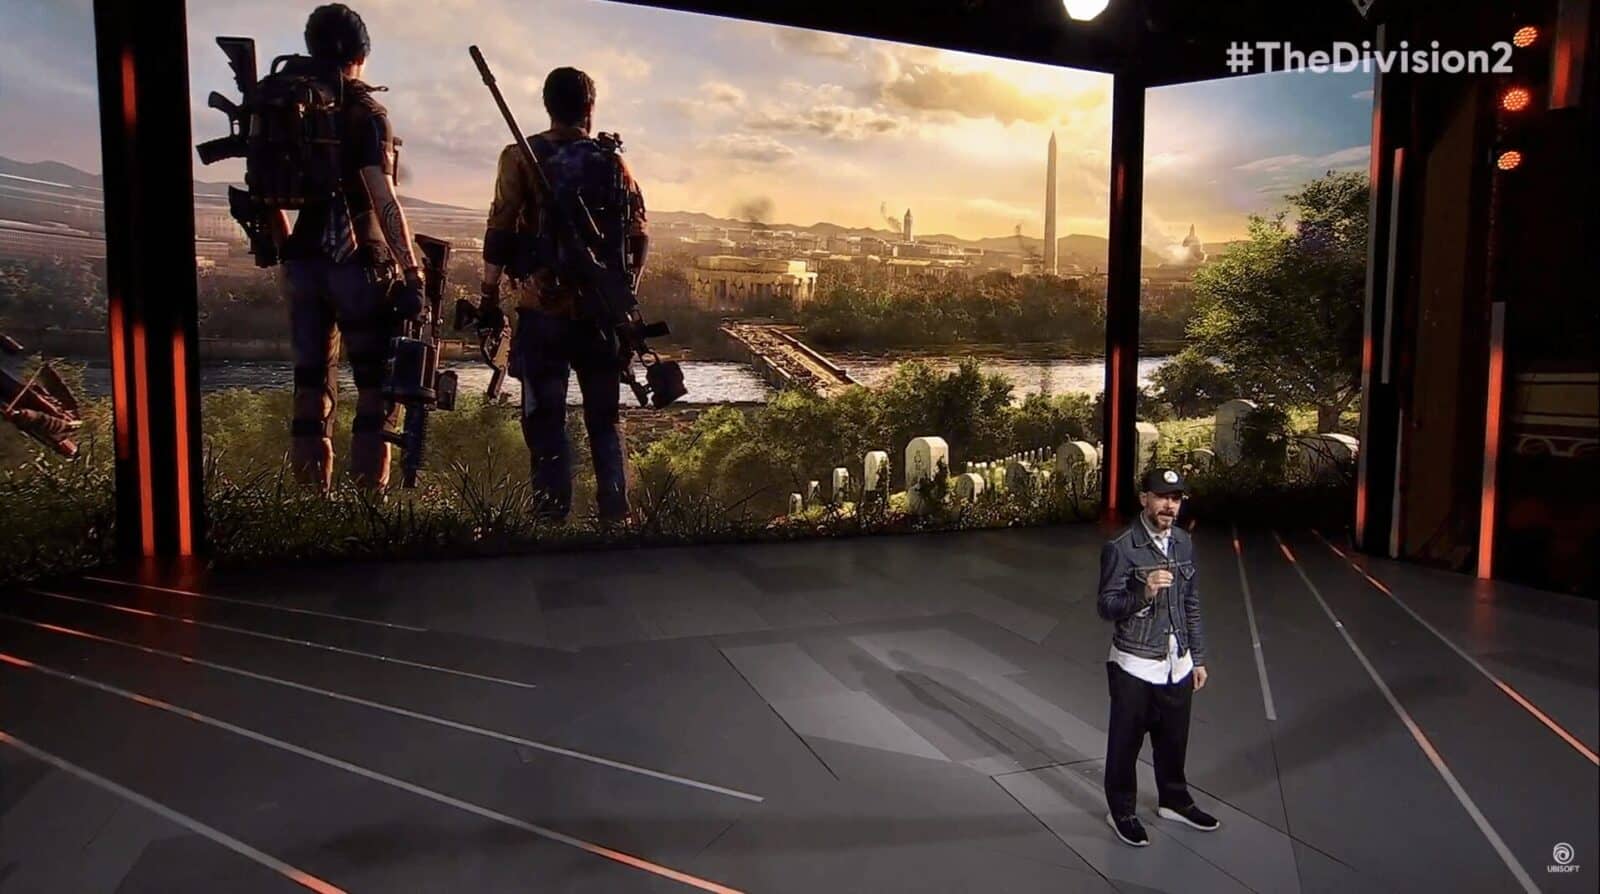 E32018 thediv2 1 #E32018 : Ubisoft fait le show avec Assassin’s Creed Odyssey et The Division 2 Assassin's Creed